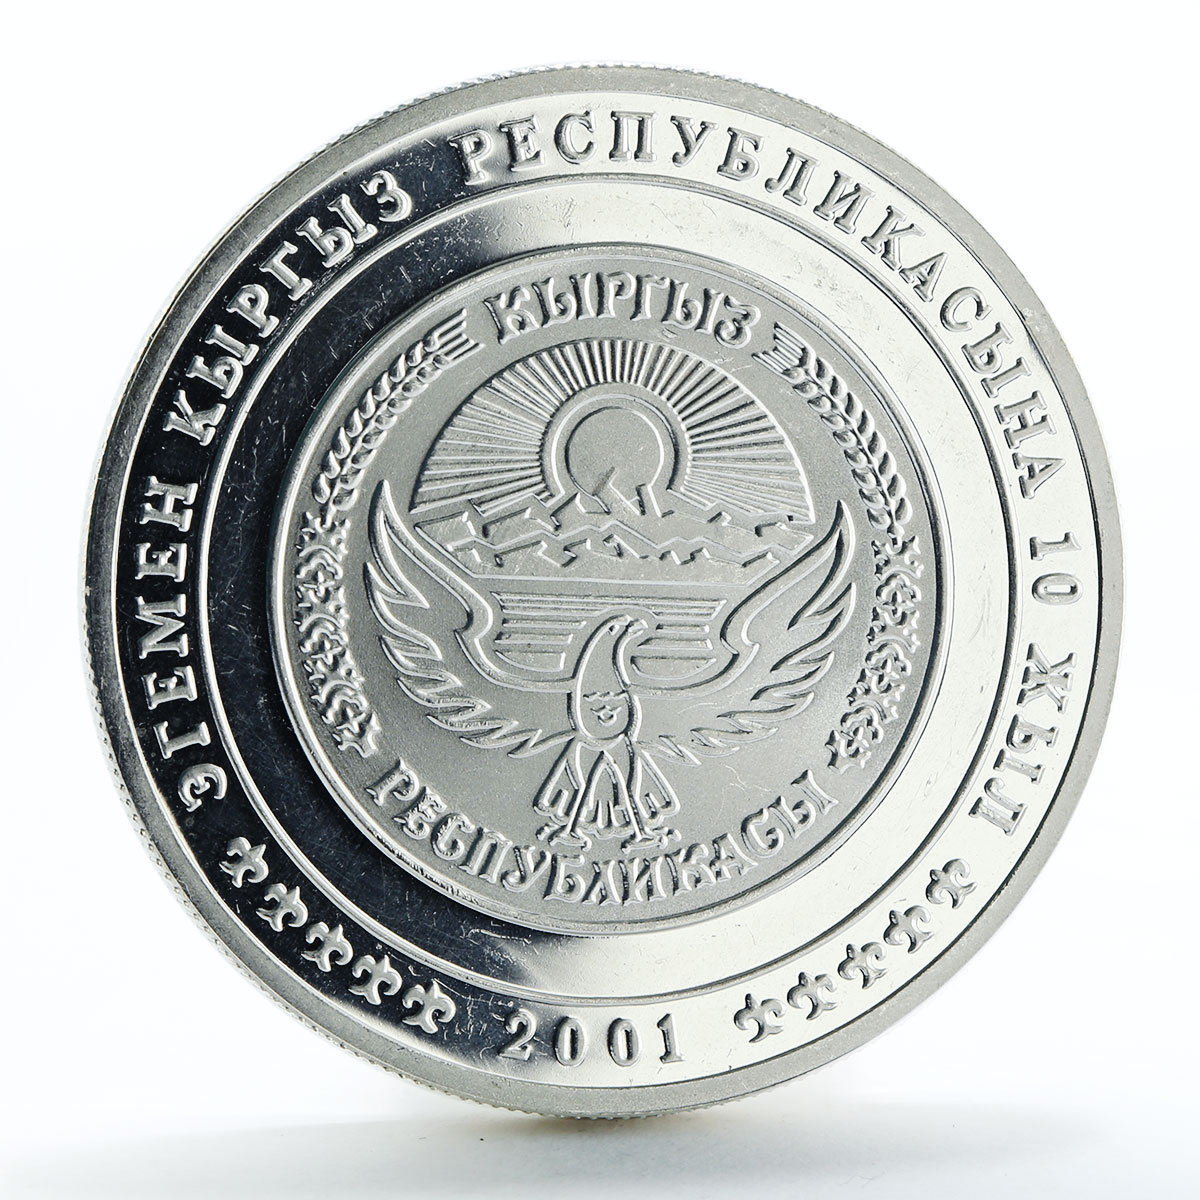 Kyrgyzstan 10 Som Anniversary of Republic Khan Tengri silver coin 2001